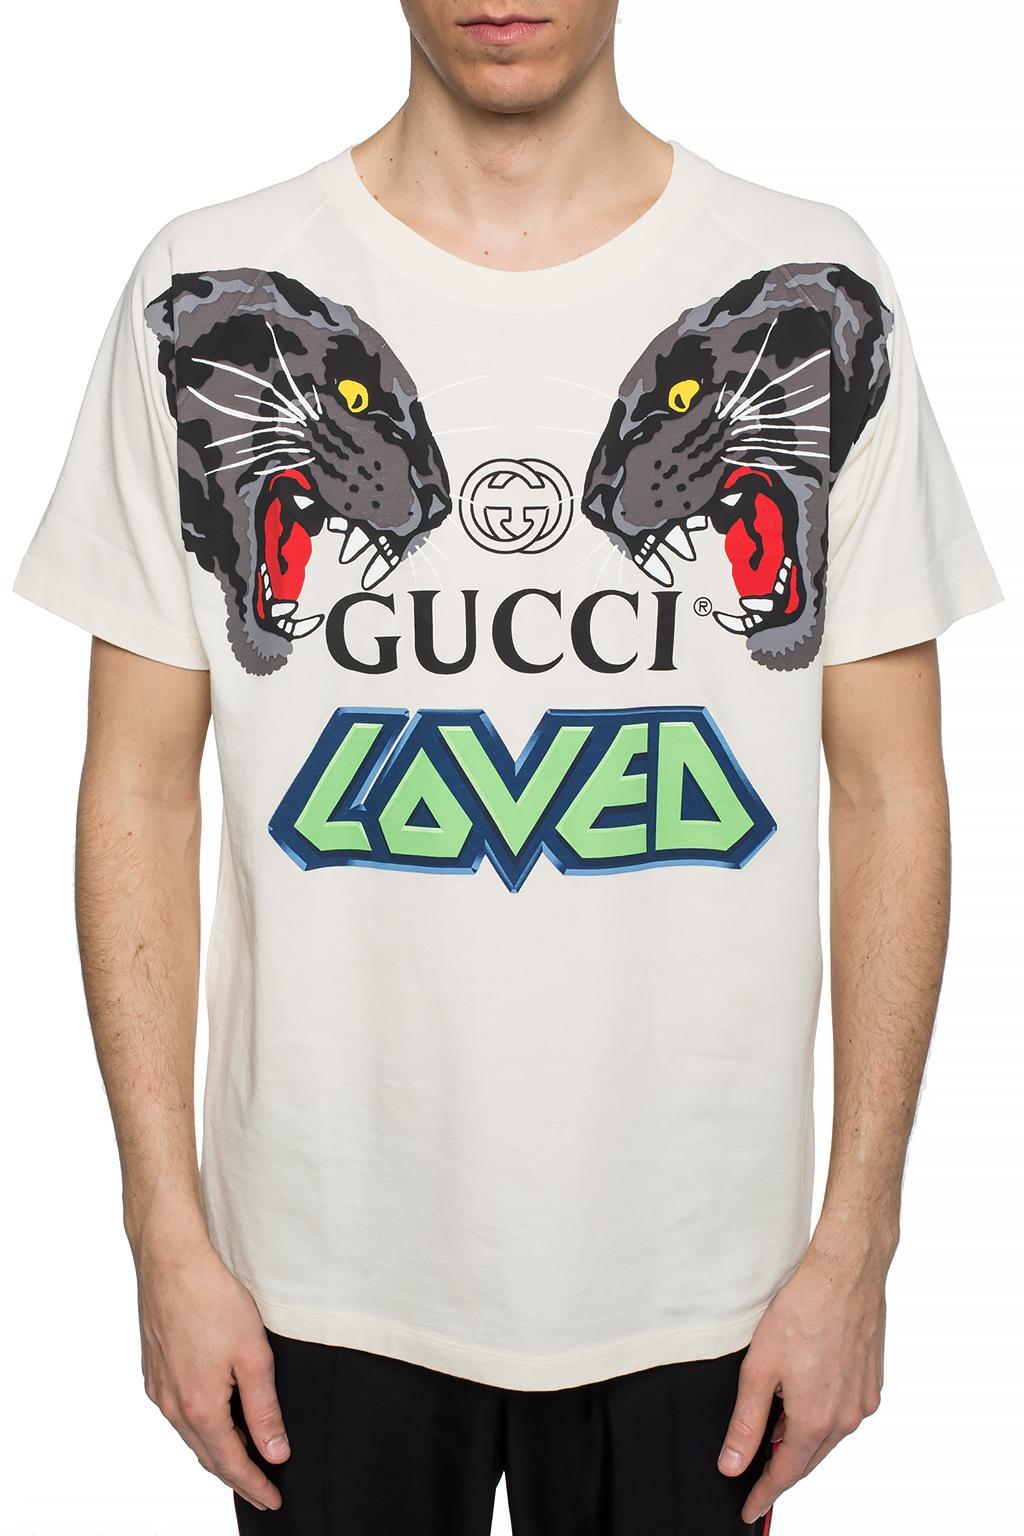 gucci loved shirt